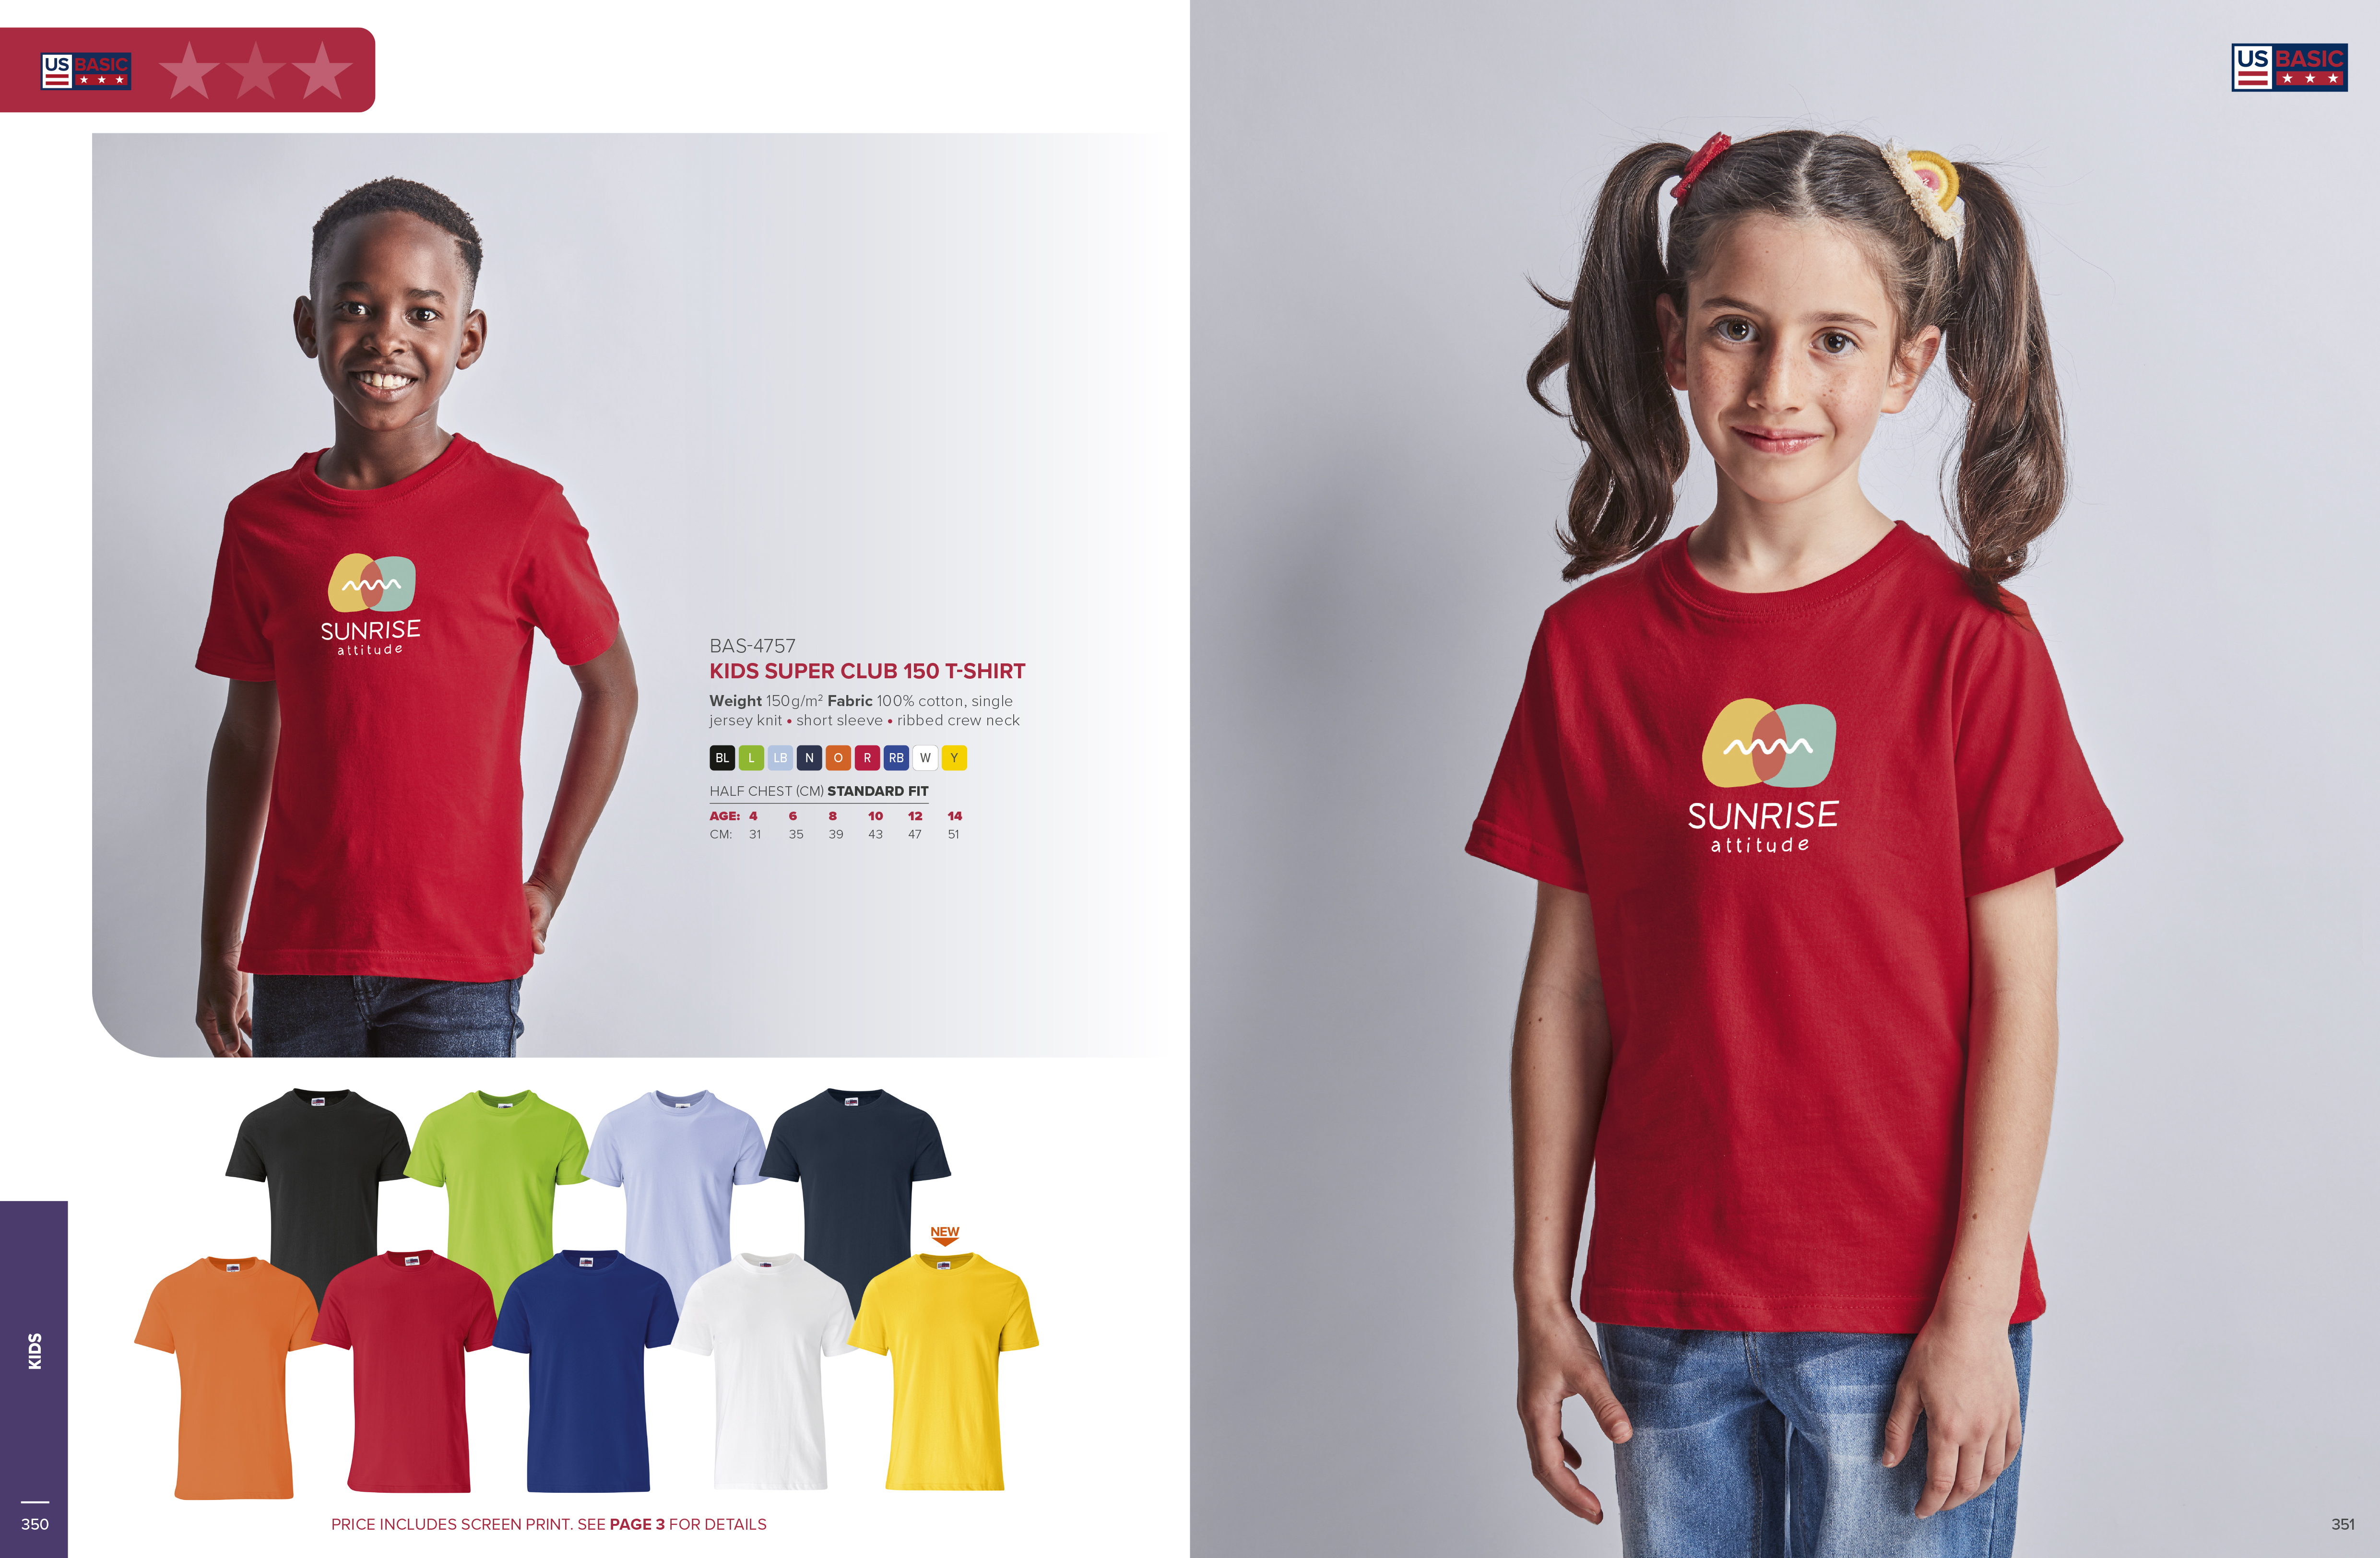 BAS-4757 - Kids Super Club 150 T-Shirt - Catalogue Image